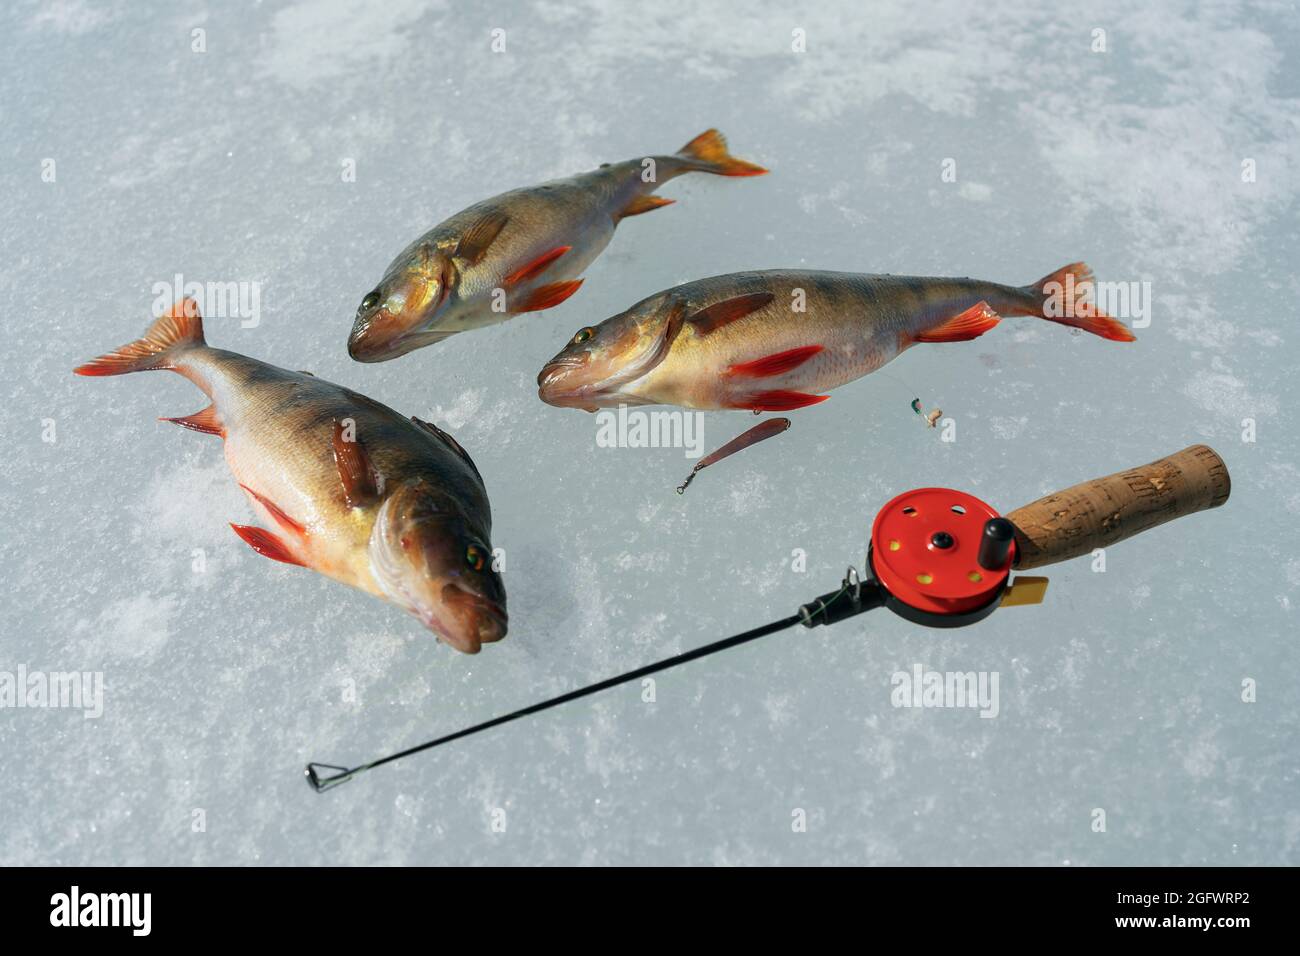 Fishing rod and three fish on ice Stock Photo